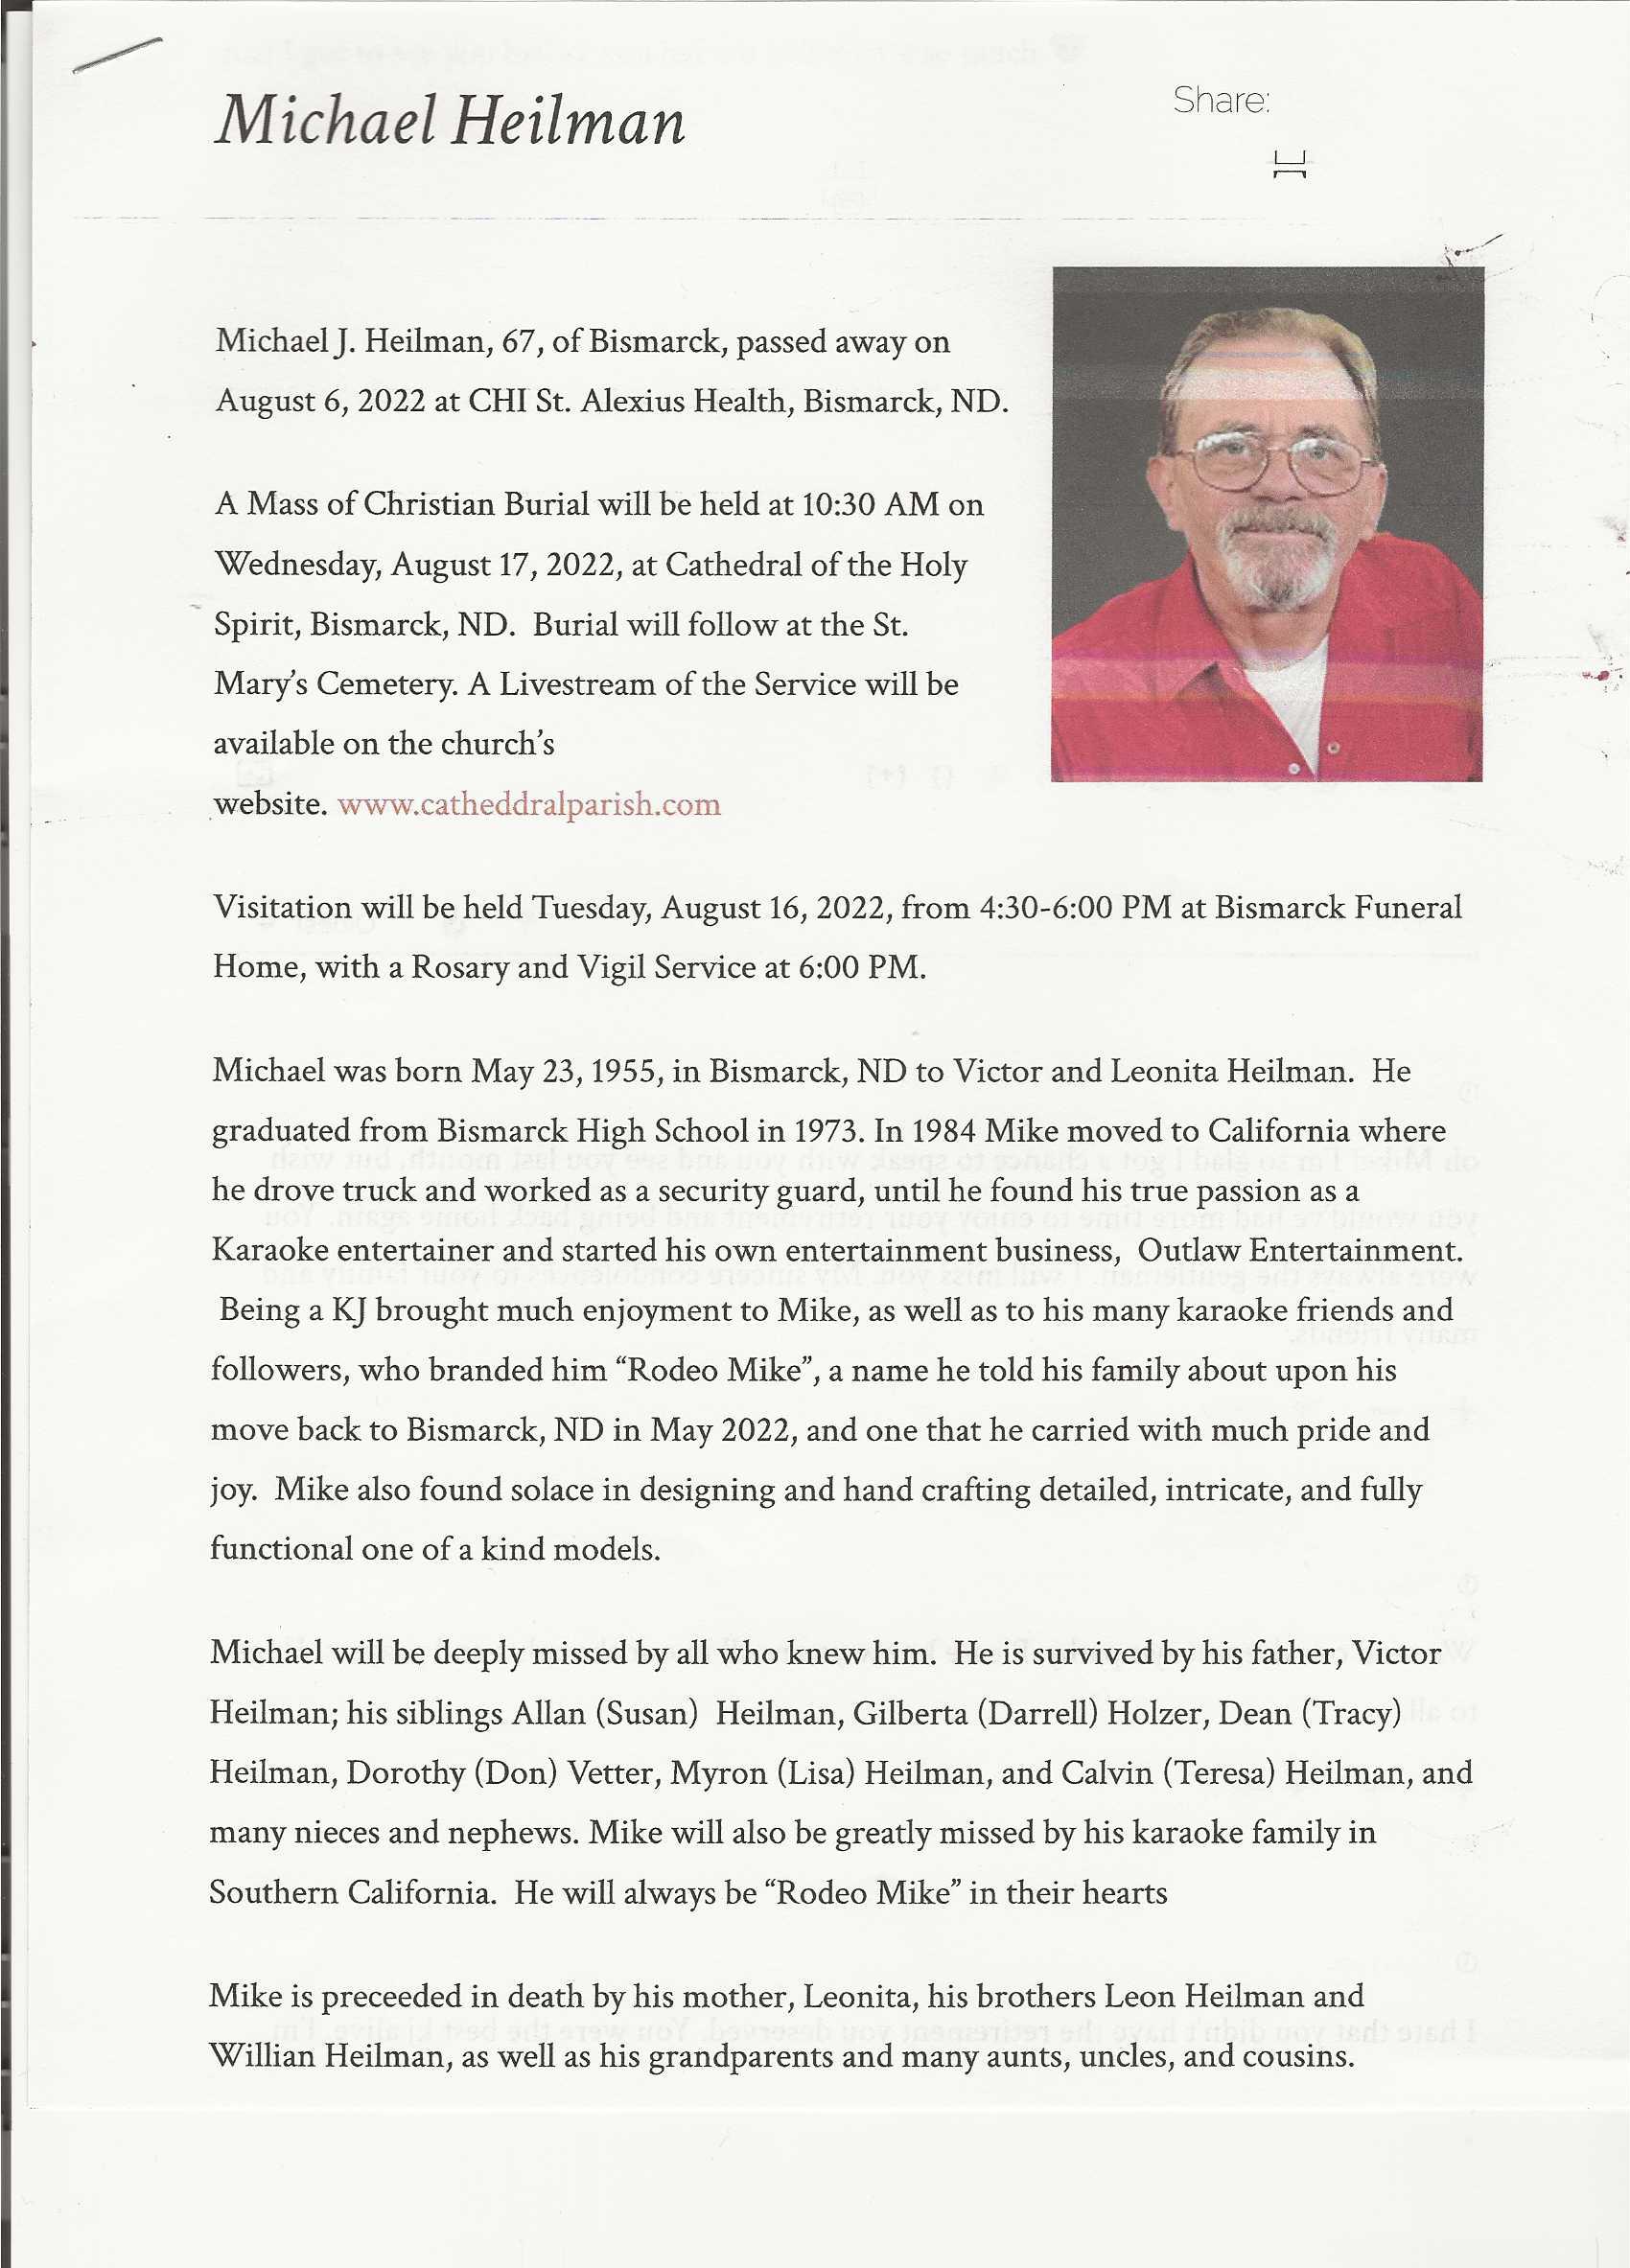 Miclhael Heilman Obituary Notice, Bismarck Tribune